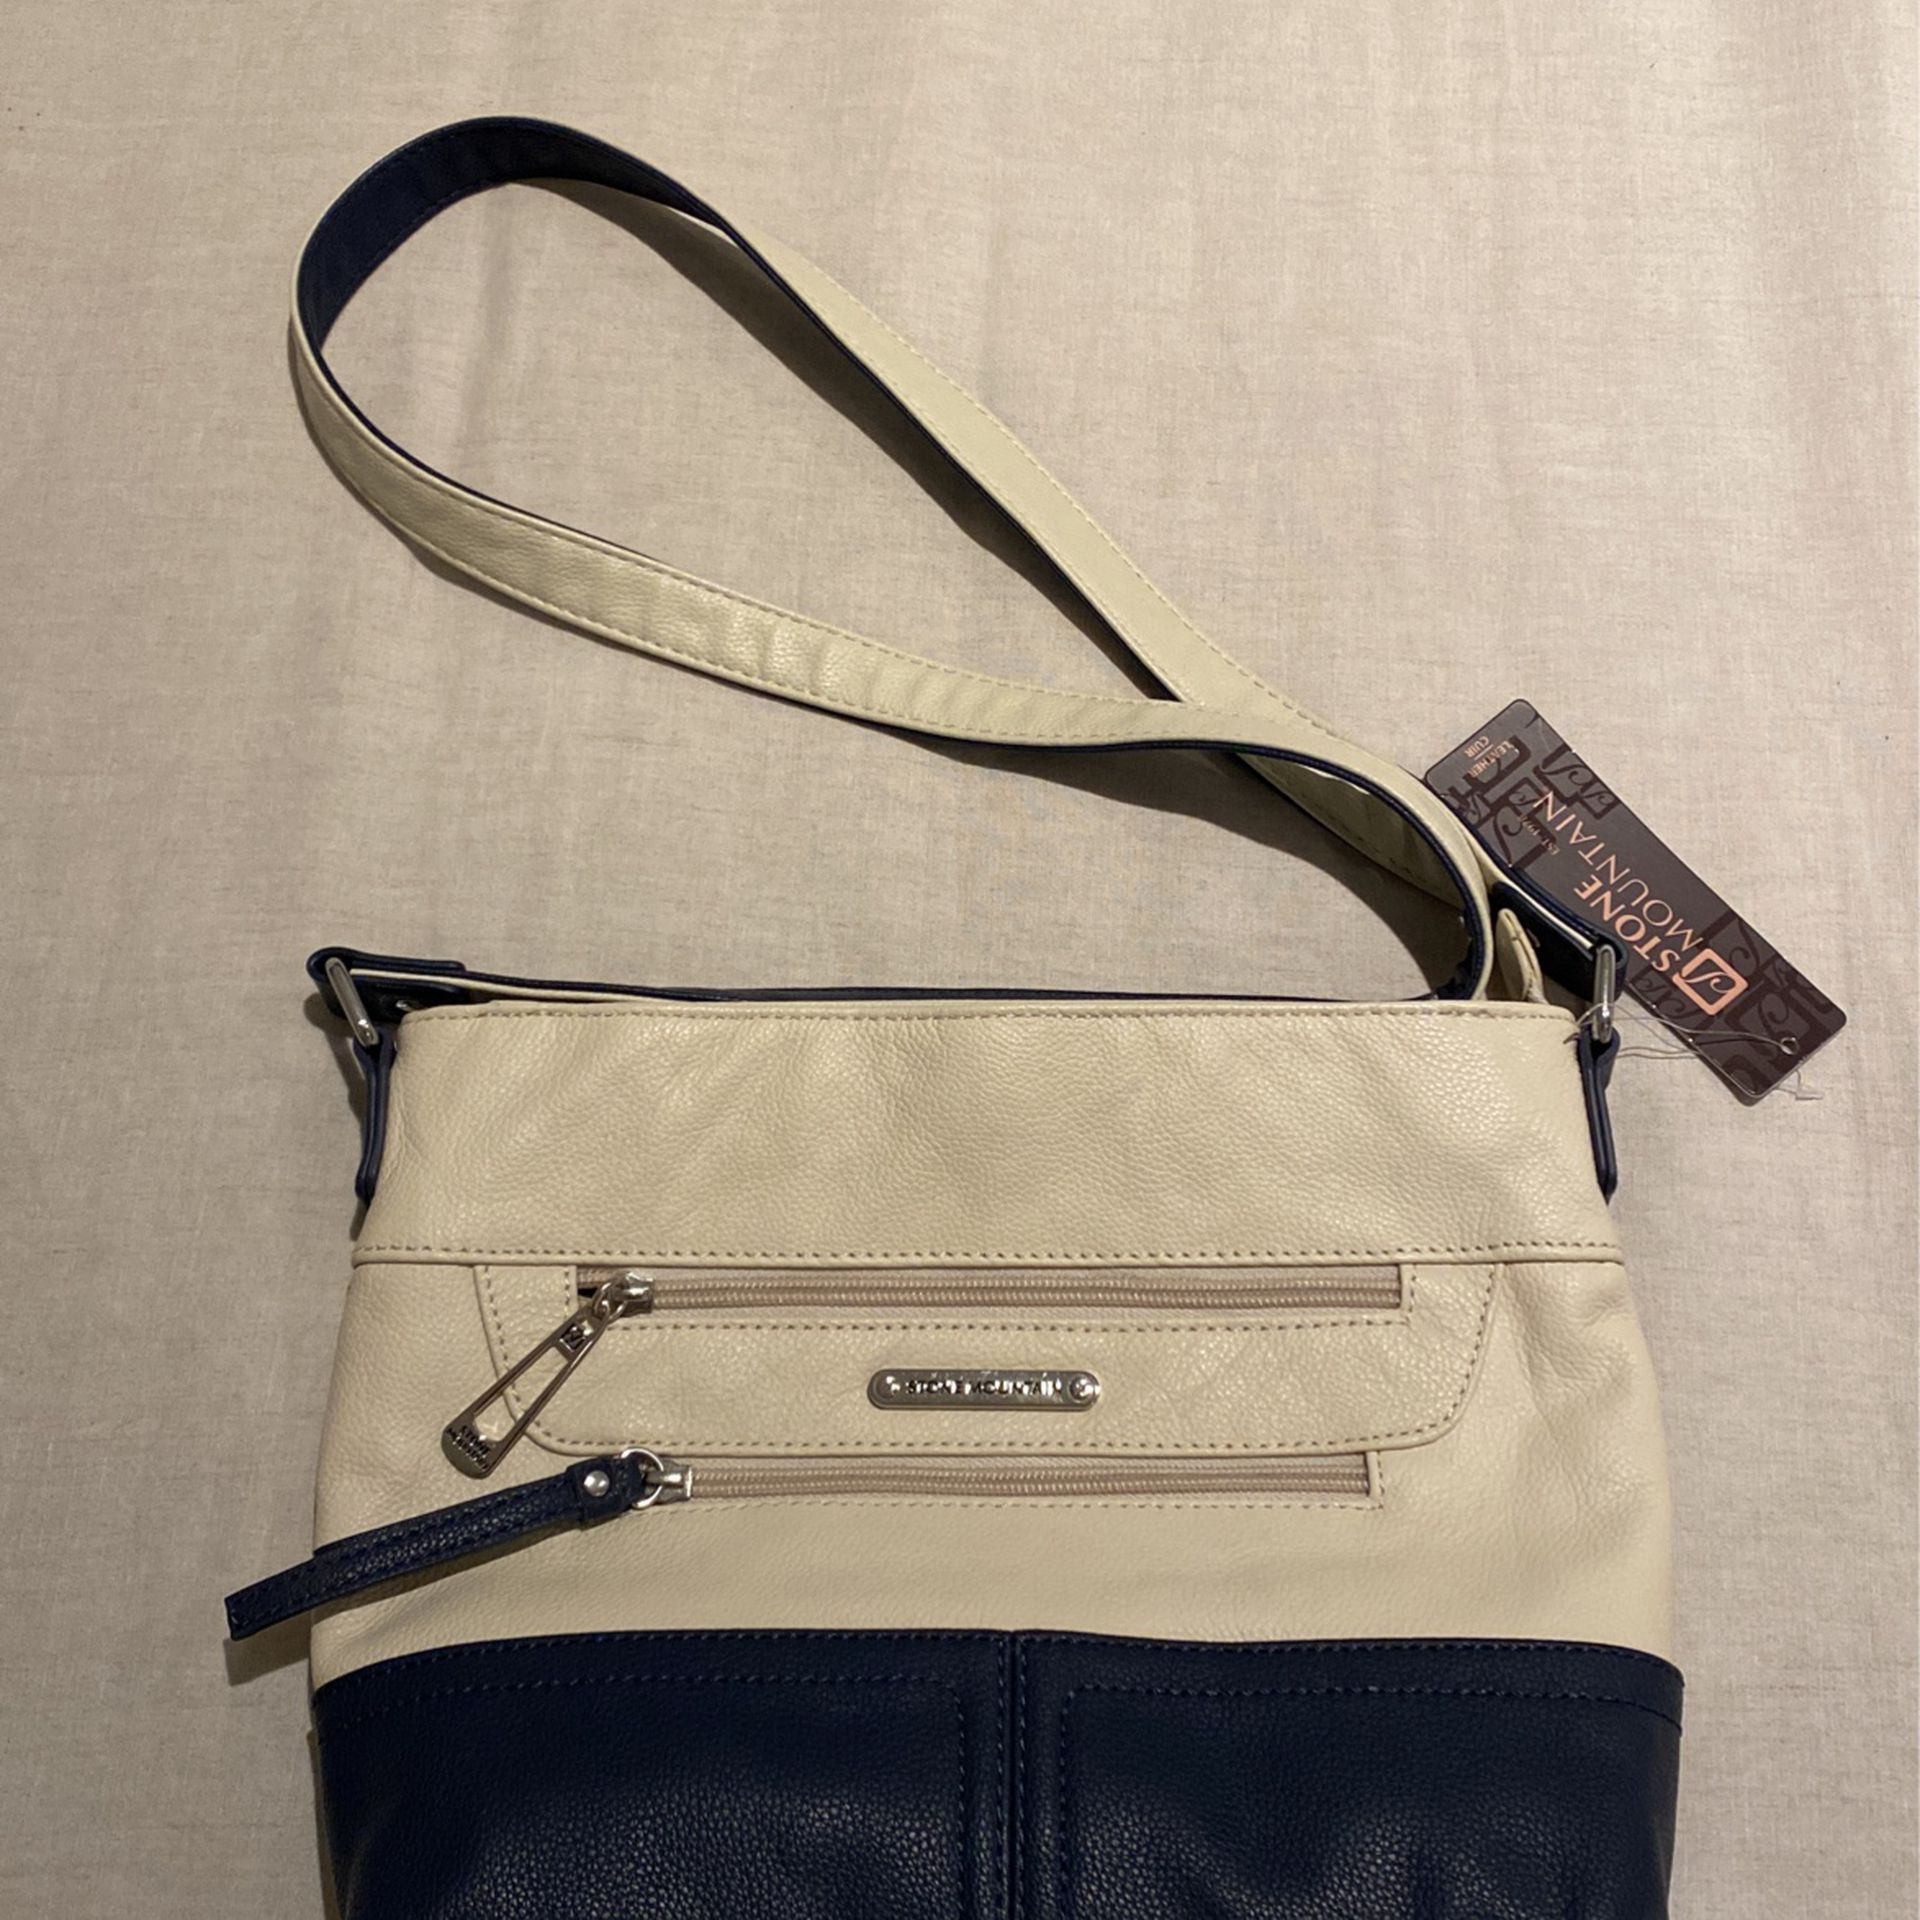 Iridescent Small Duffle Bag for Sale in Atlanta, GA - OfferUp